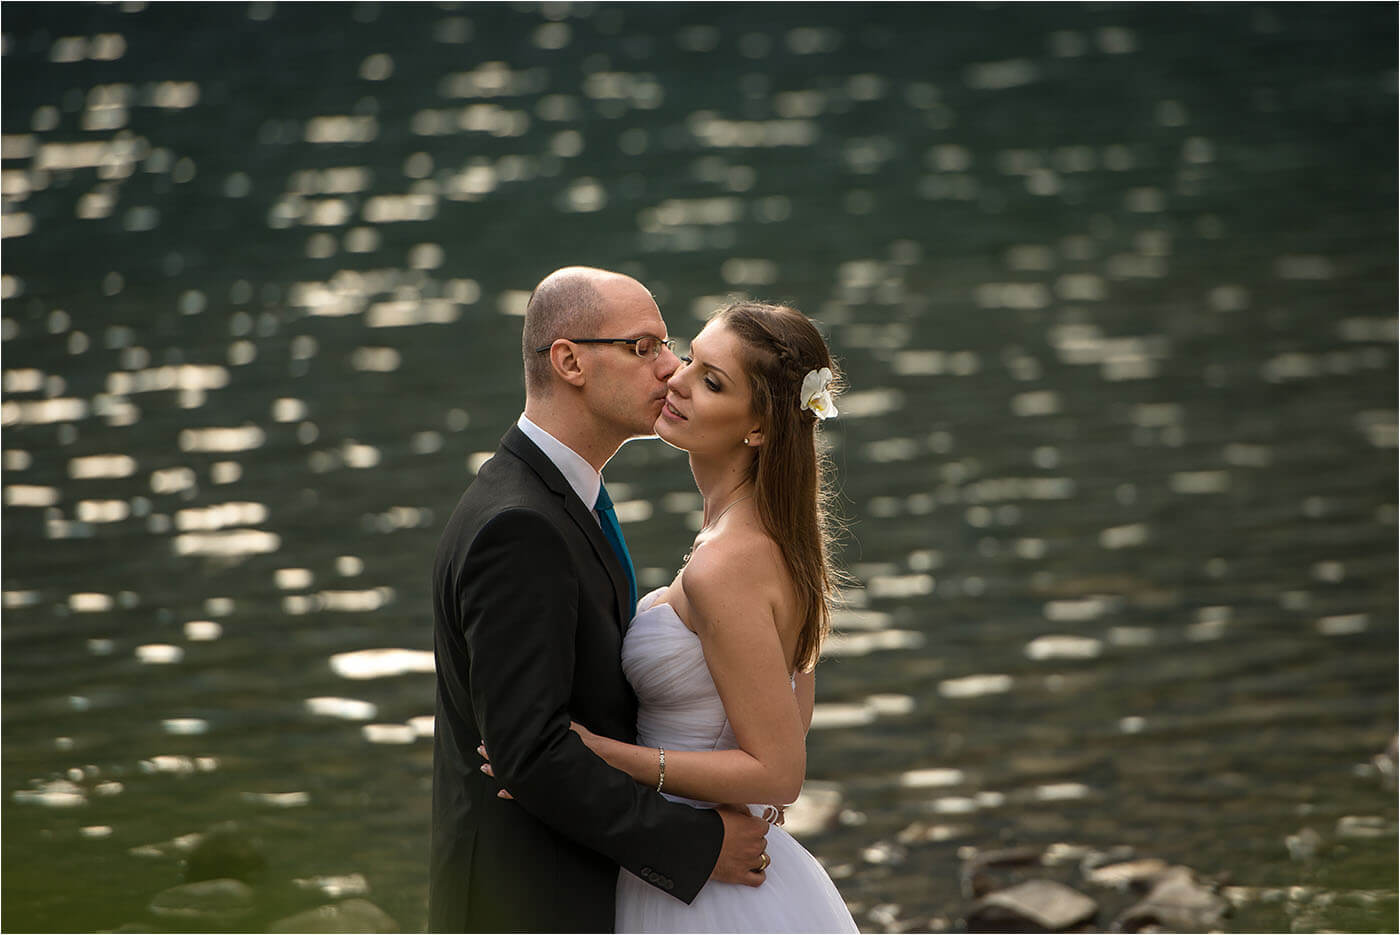 Destination Wedding Photoshoot in Slovakia (Tatra Mountains) - Lake Poprad in the background